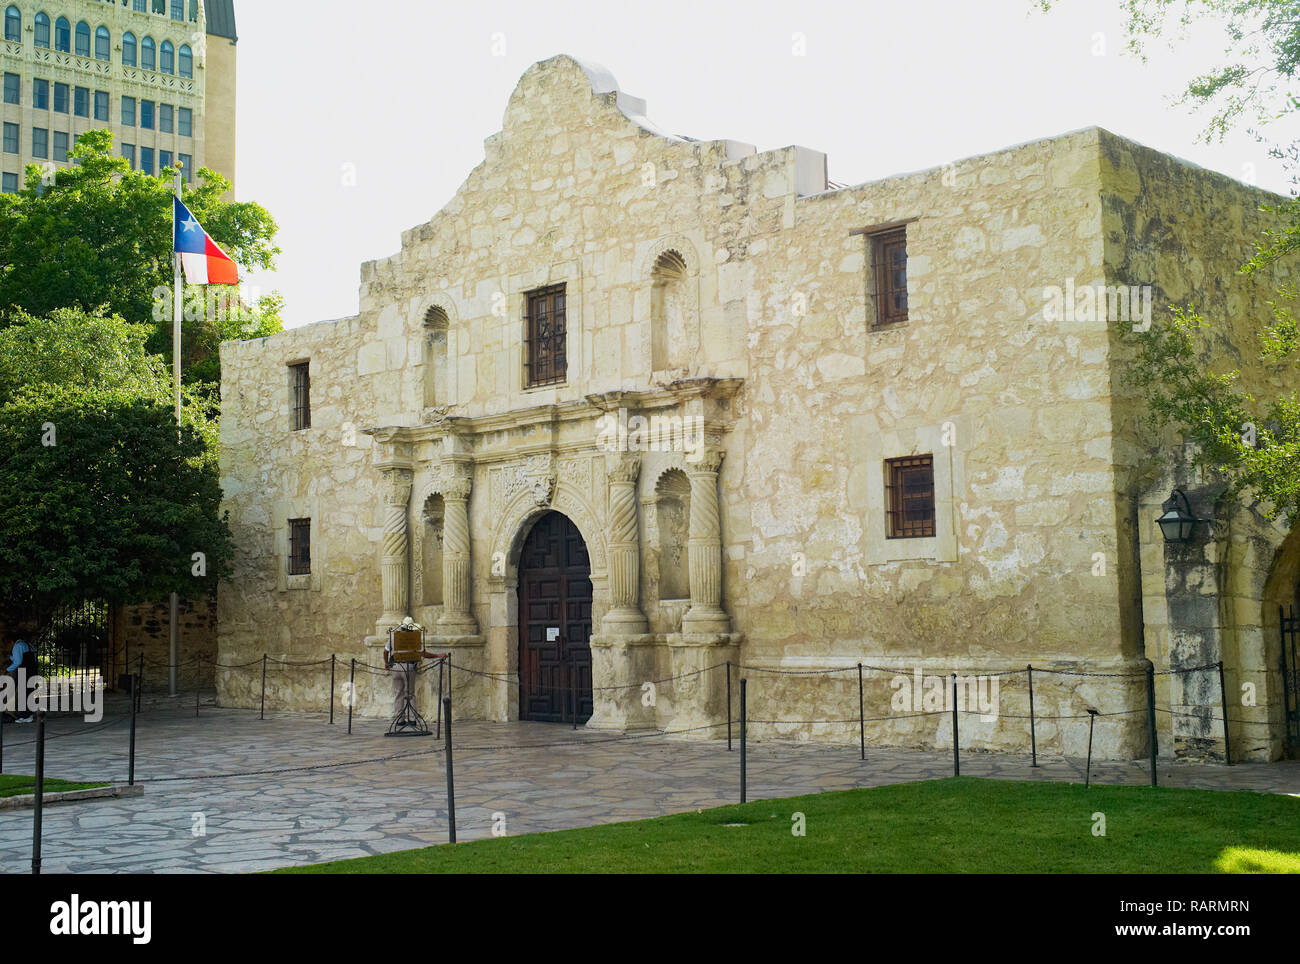 San Antonio, Texas, USA - 15 juillet 2009 : la façade avant de la fort Alamo à San Antonio, au Texas, avec un drapeau Texan. Banque D'Images